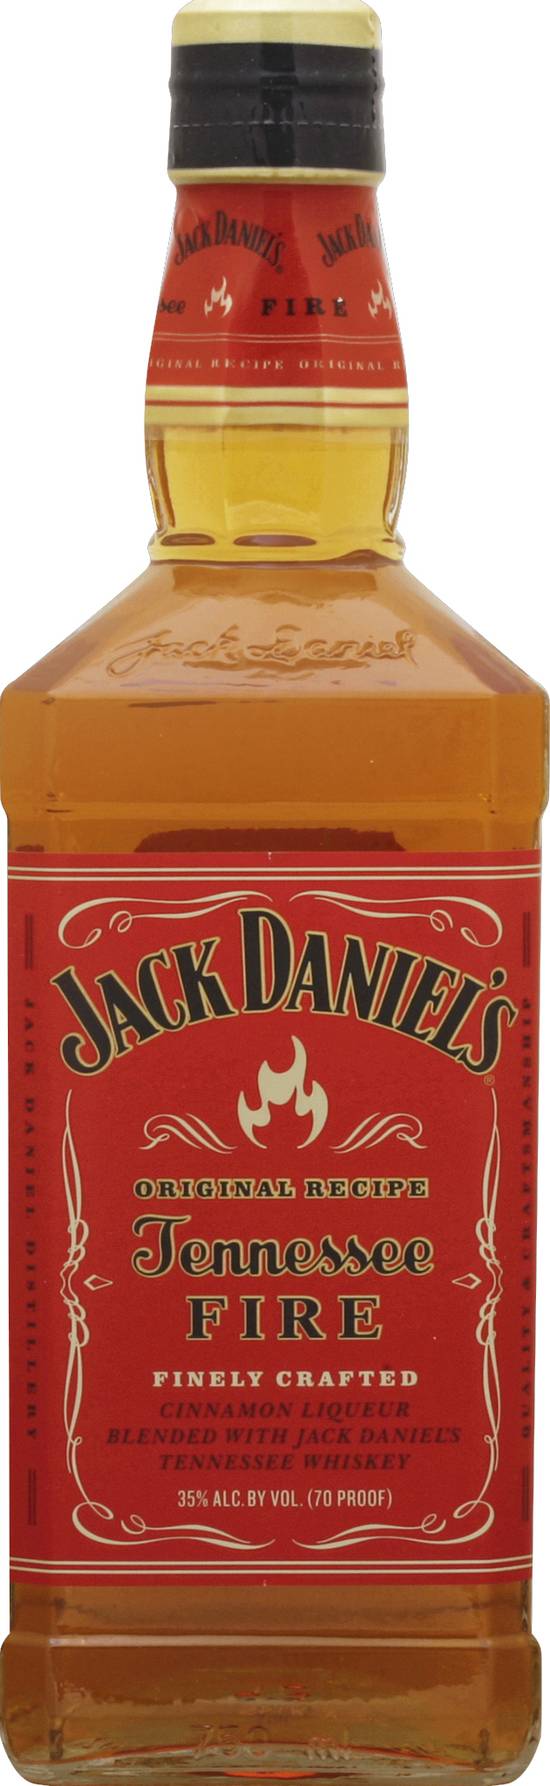 Jack Daniel's Tennessee Fire Whiskey (750 ml)